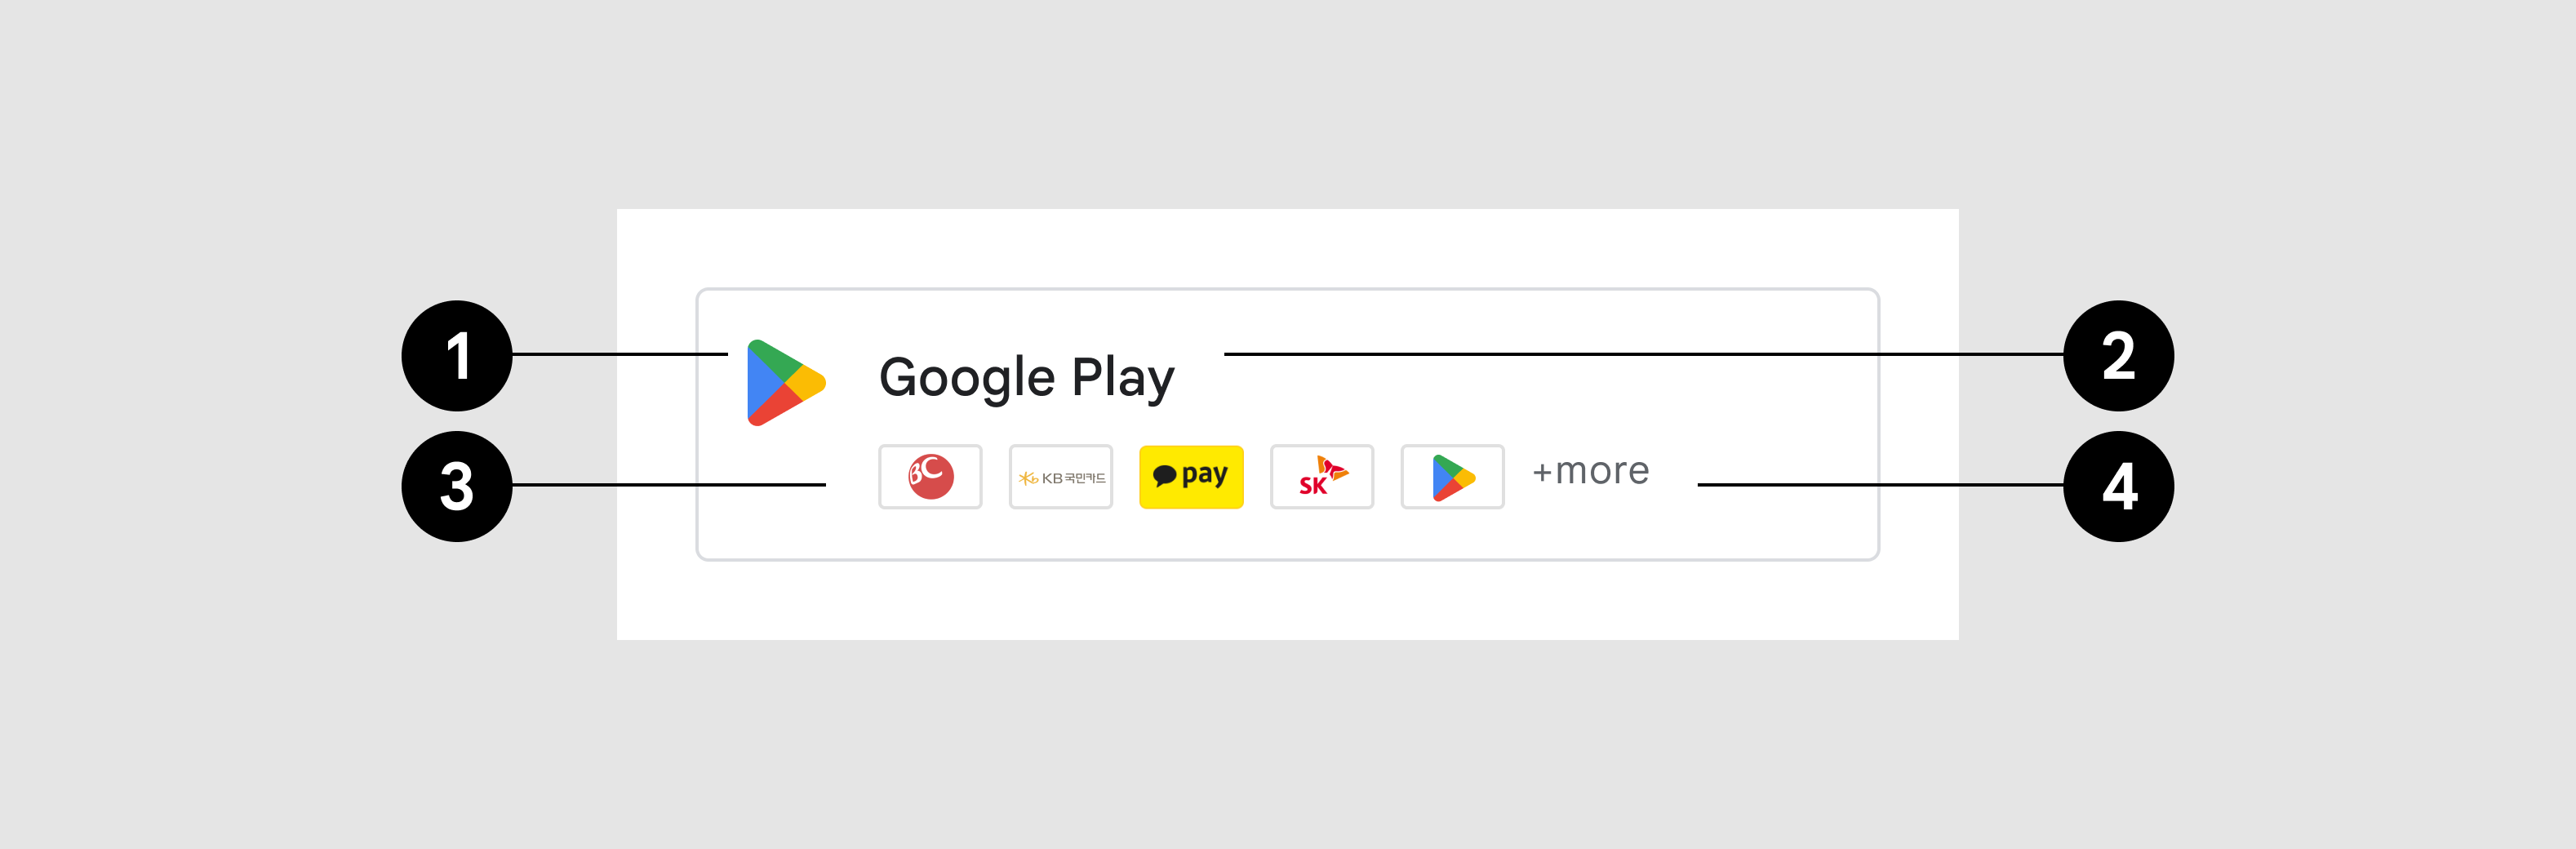 Google Play 按钮